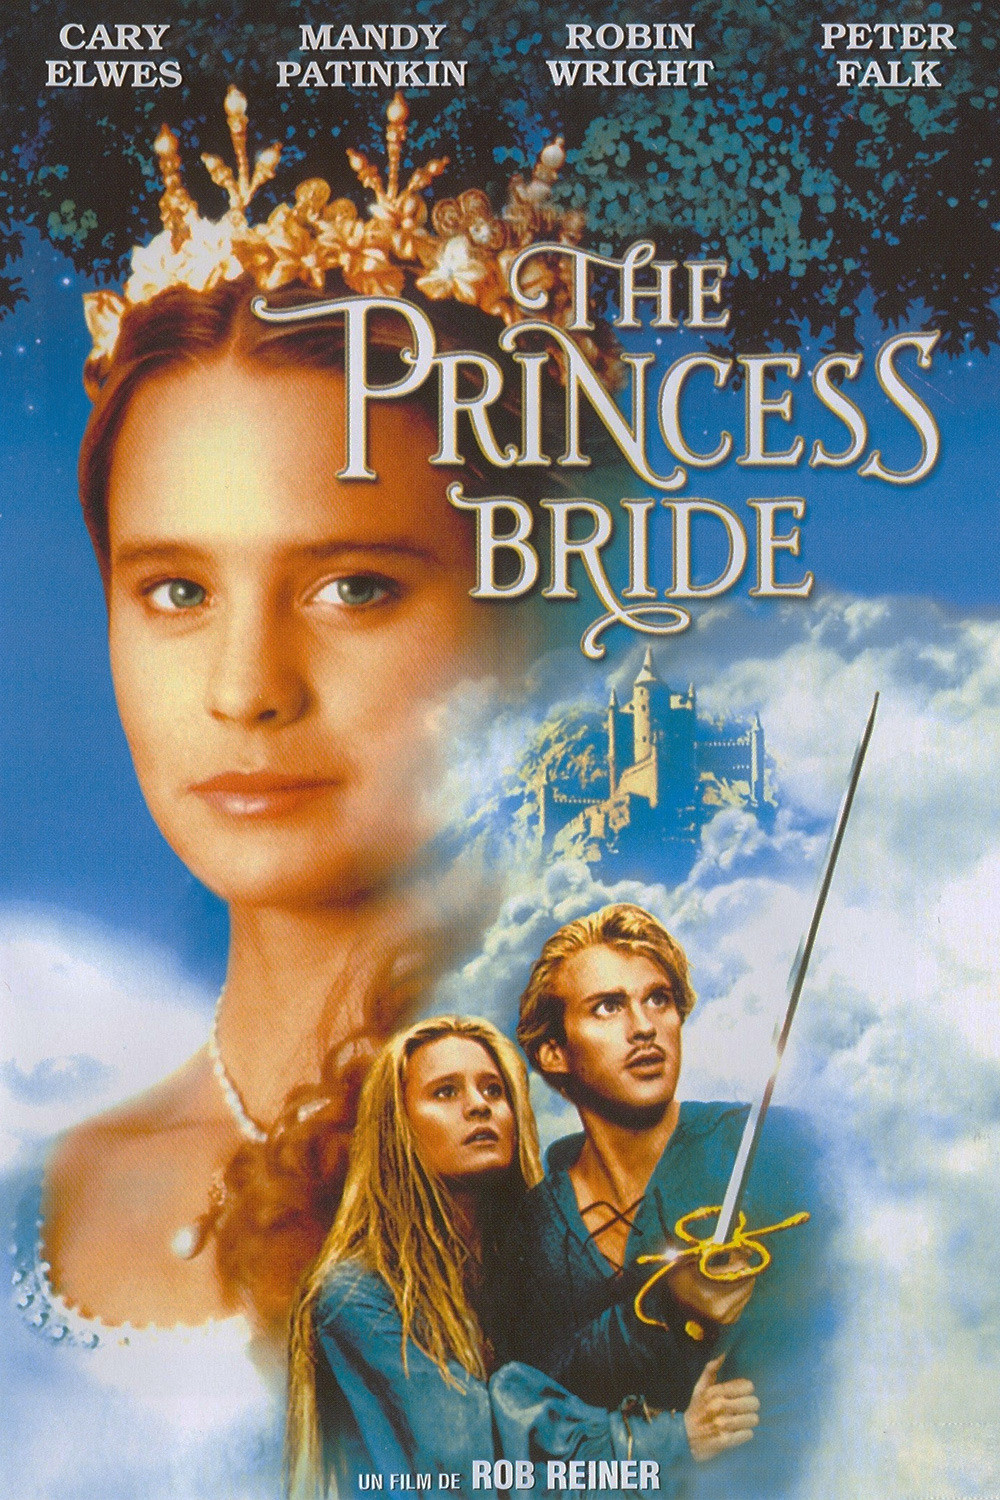 The Princess Bride HD wallpapers, Desktop wallpaper - most viewed